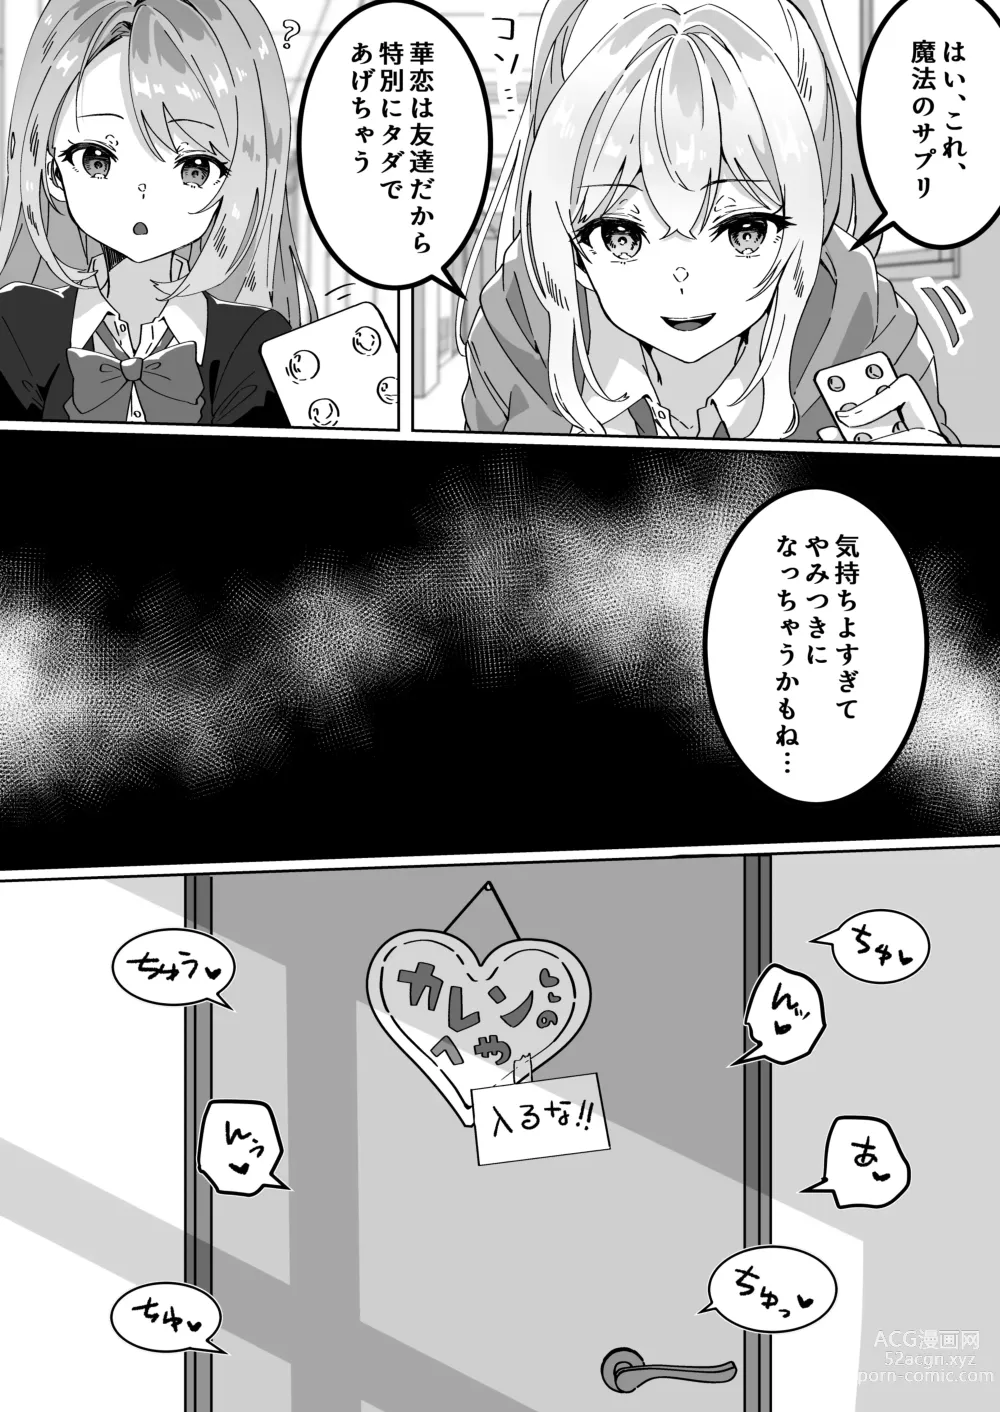 Page 7 of doujinshi Chibikko JK wa Irete Hoshii - Little girls and big dicks.